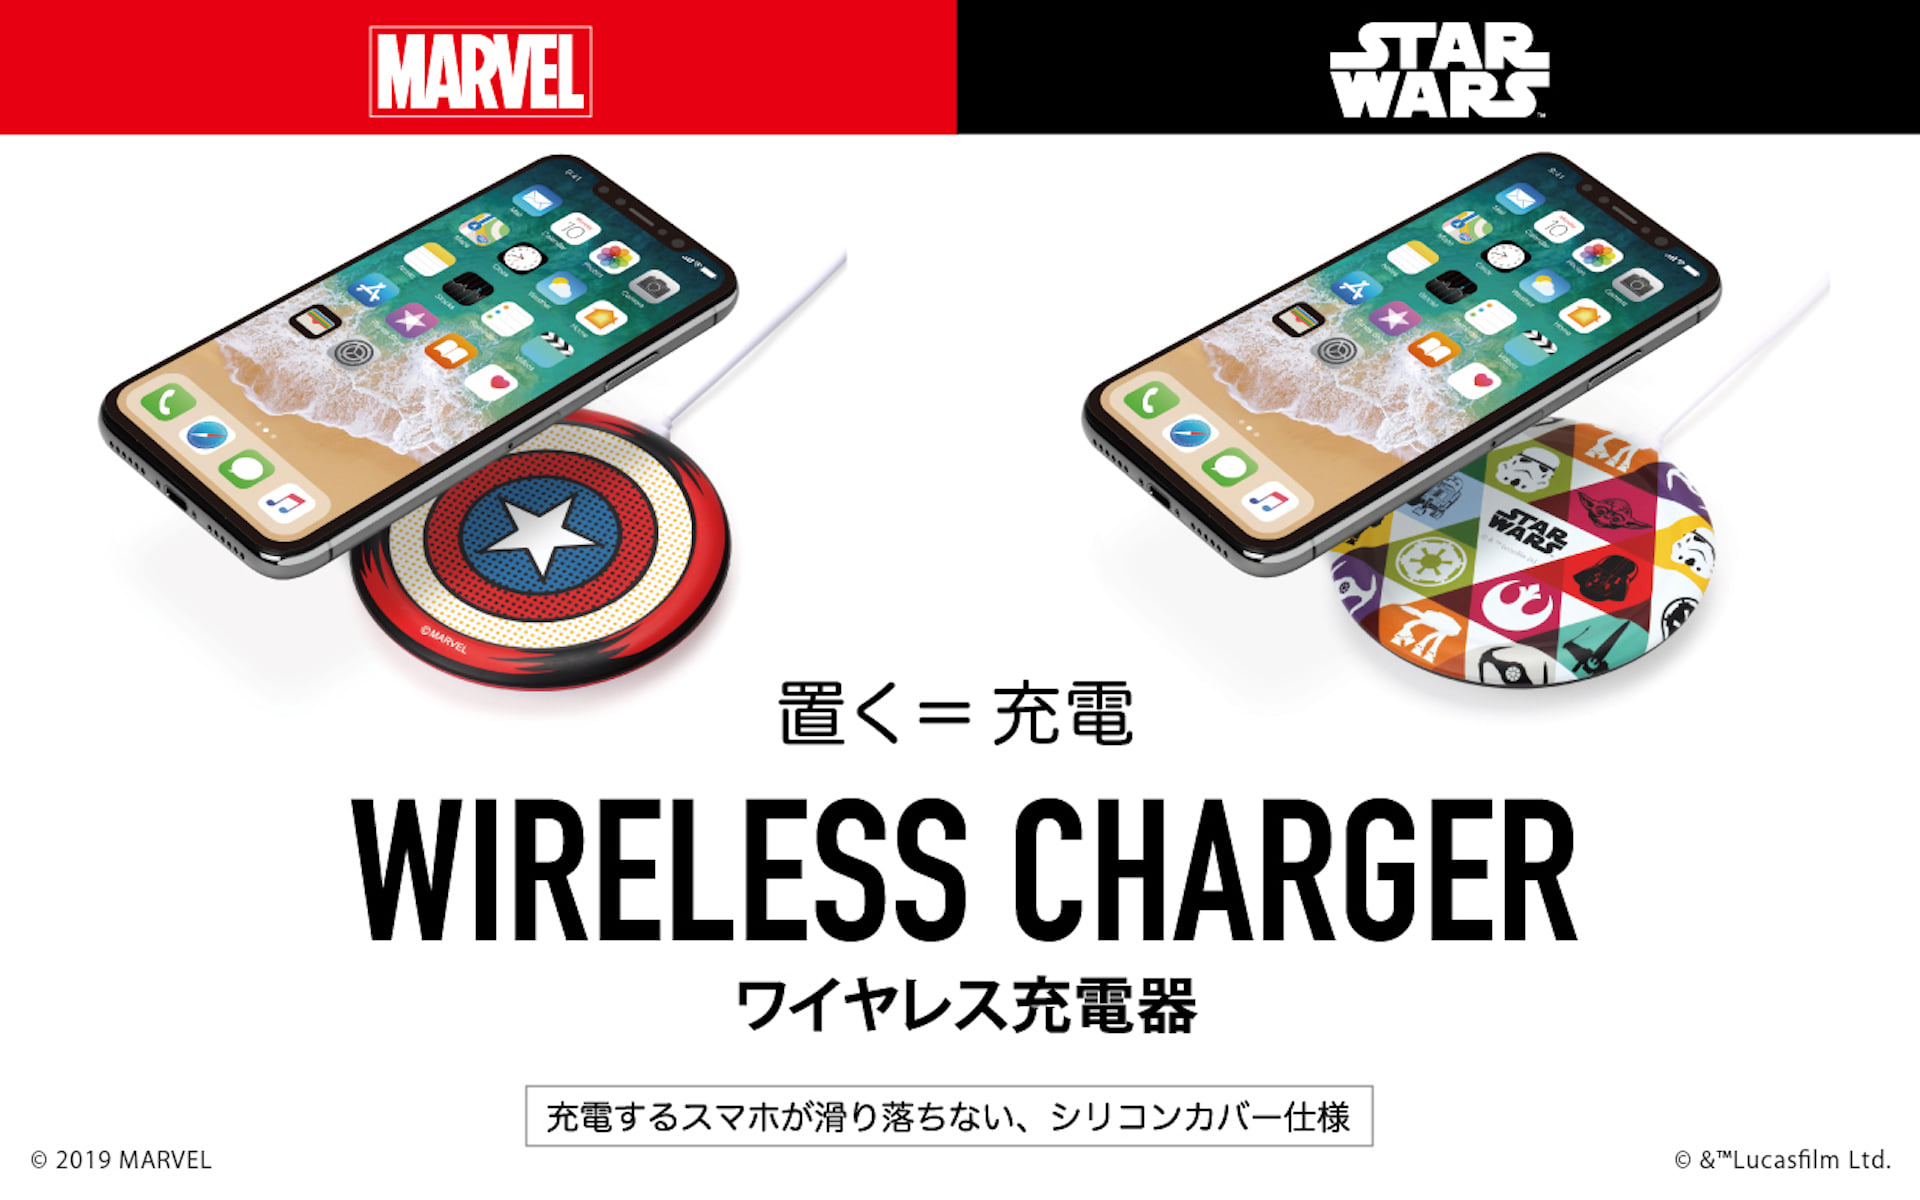 Marvel Starwars 仕様のqi認証ワイヤレス充電器が登場 厚さ12mm 置くだけで充電可能 19年7月18日 エキサイトニュース